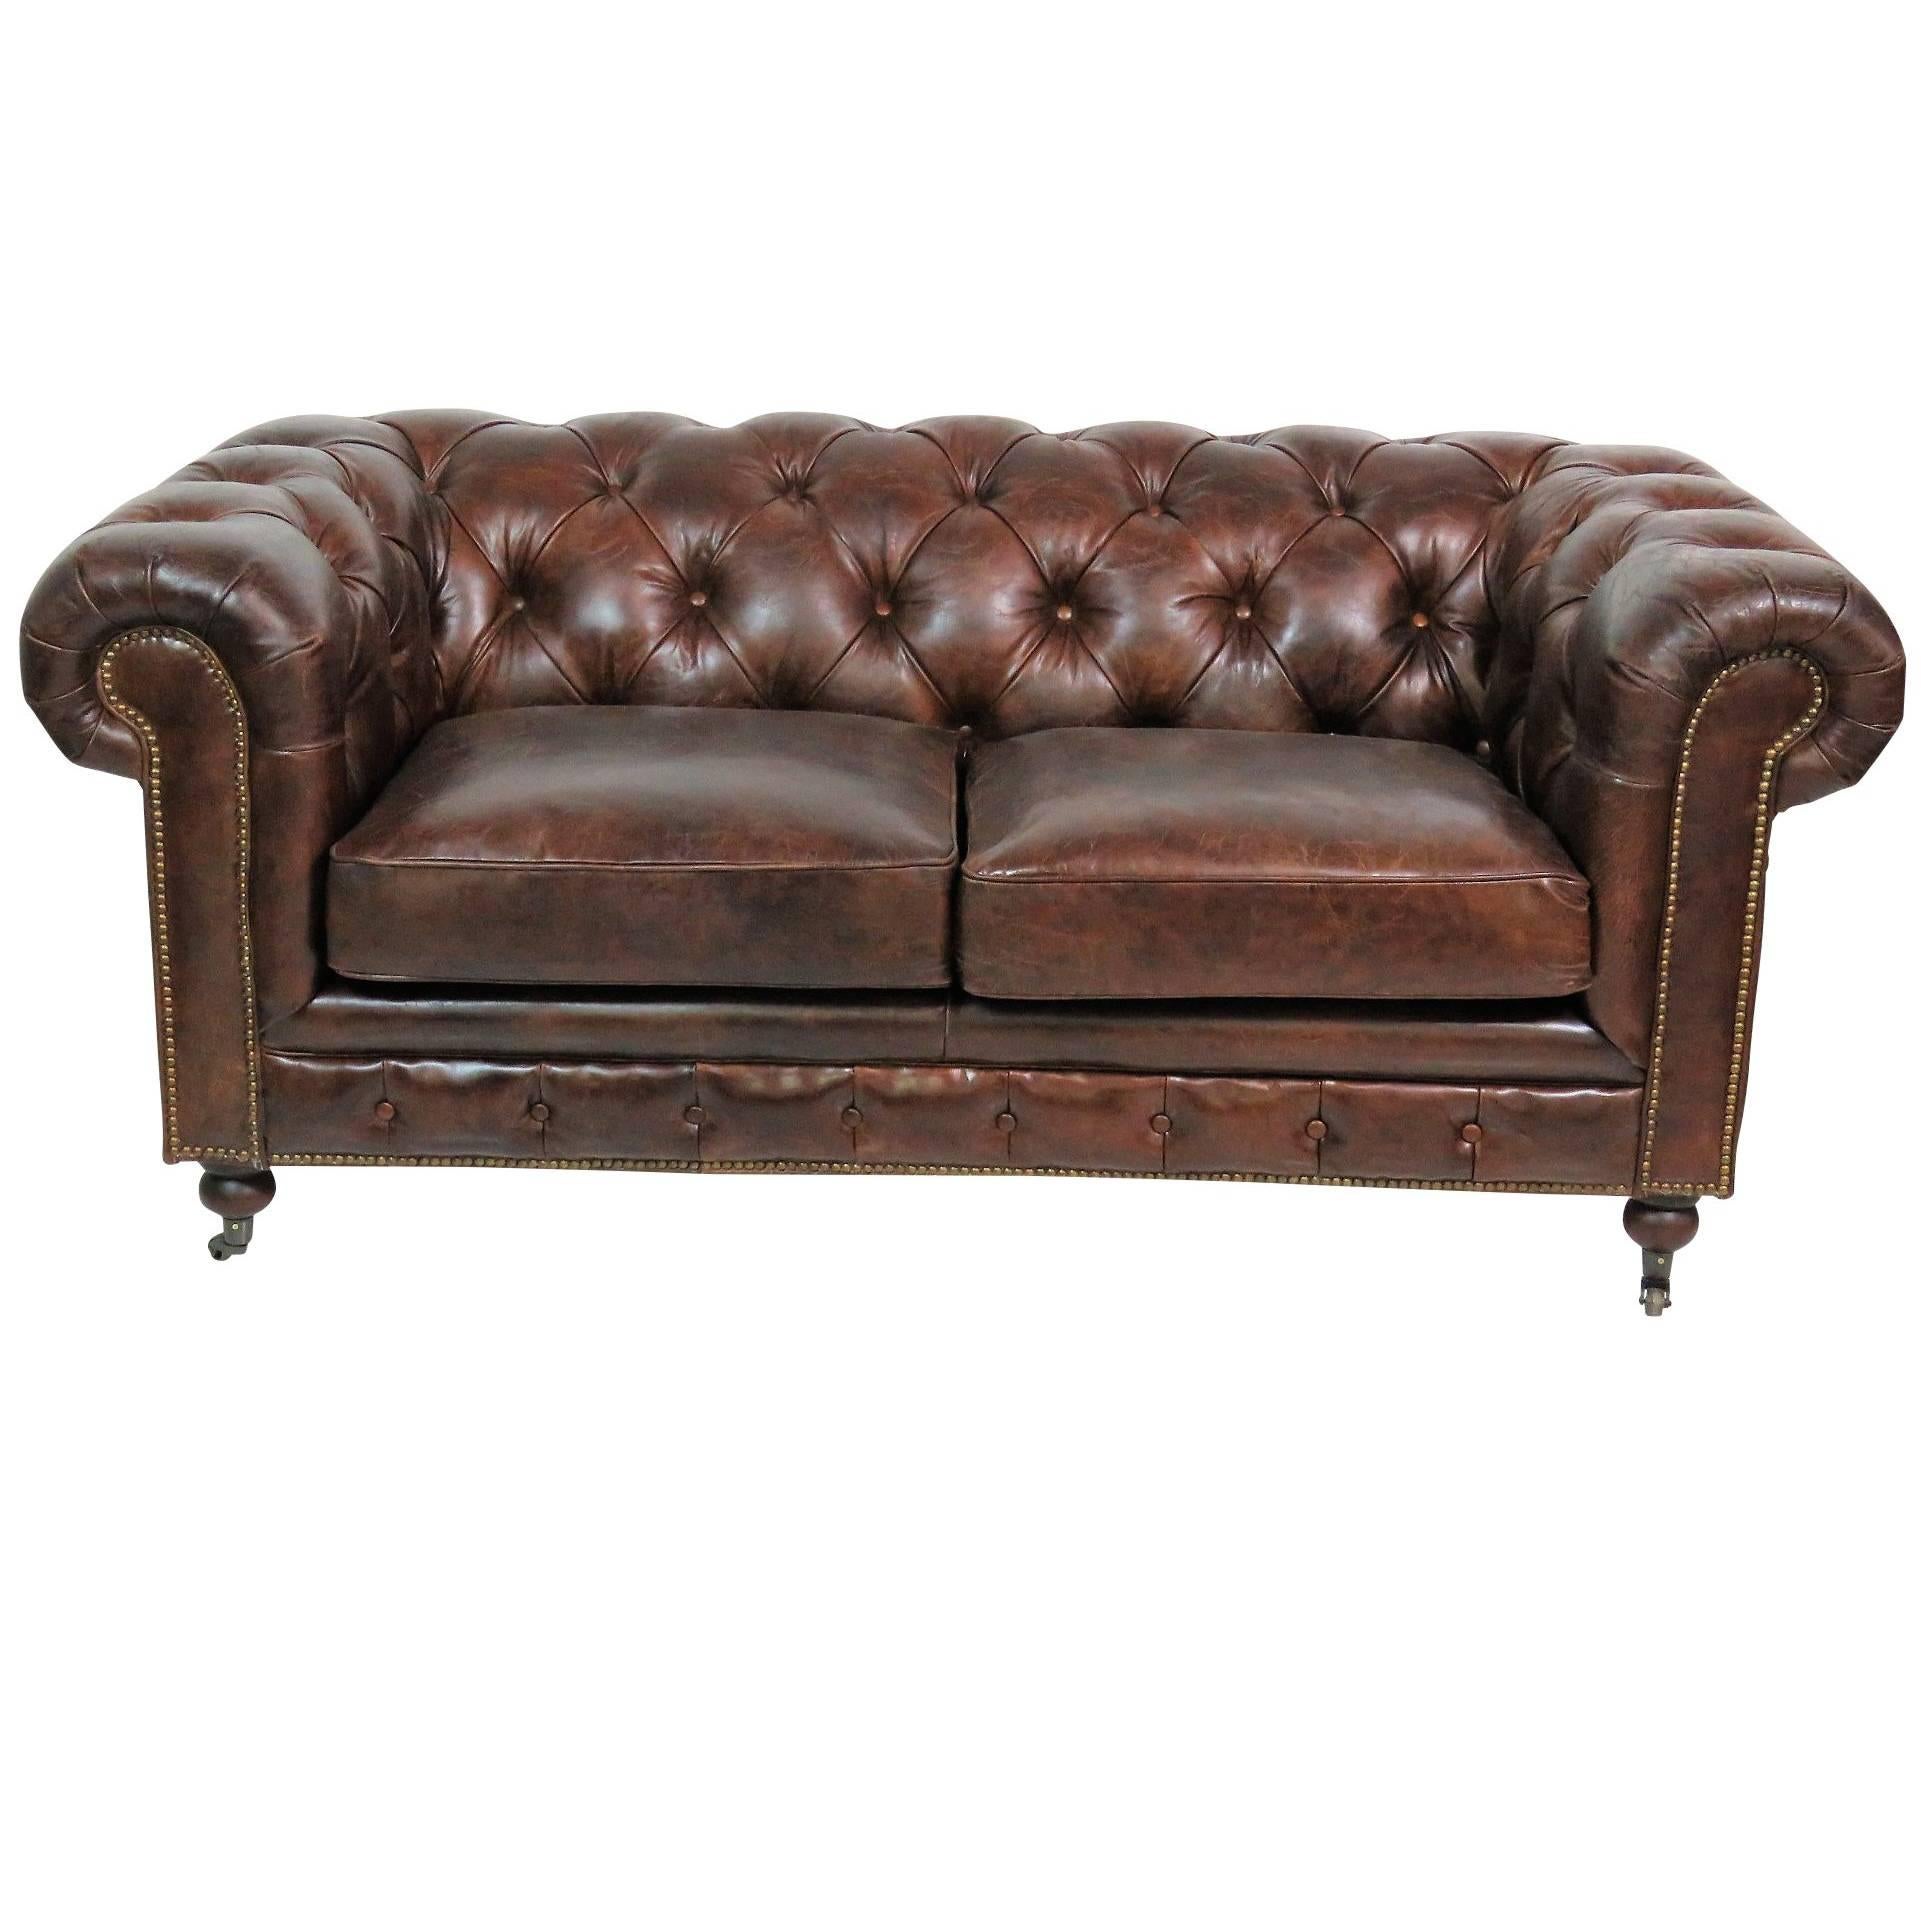 Georgian Style Distressed Leather Tufted Sofa